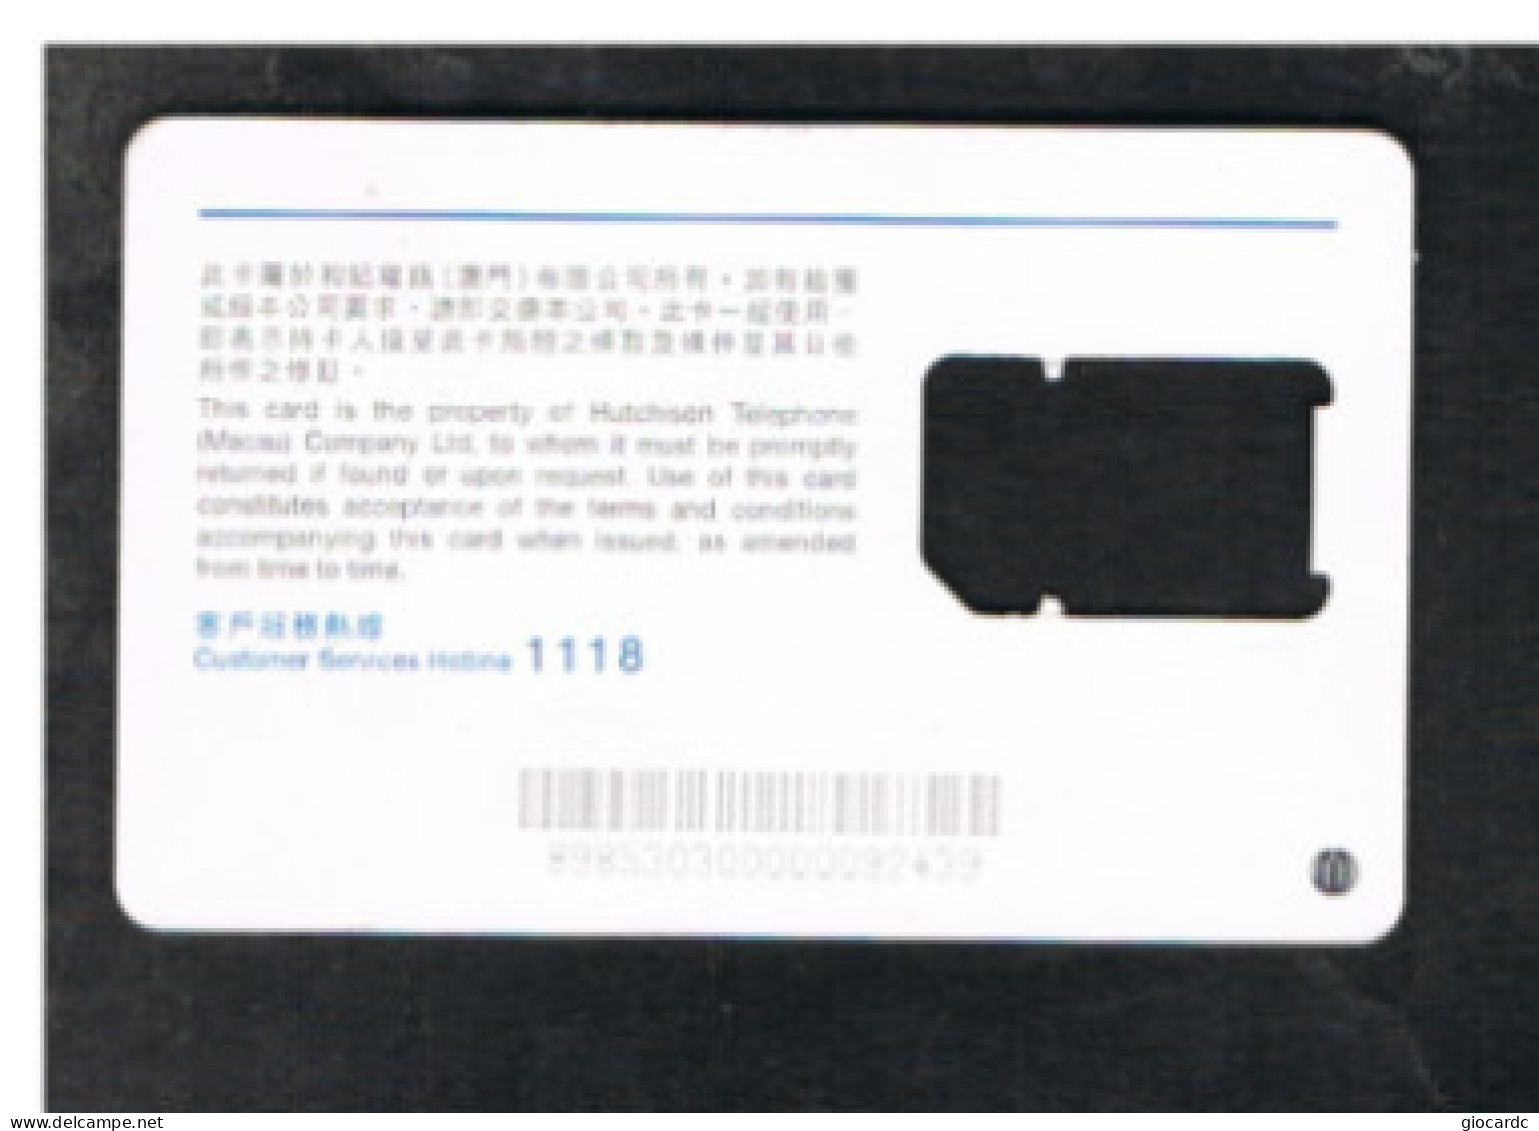 MACAO   - HUTCHISON TELECOM  -  (GSM SIM) -  SKYLINE  - USED WITHOUT CHIP   -  RIF. 786 - Macau